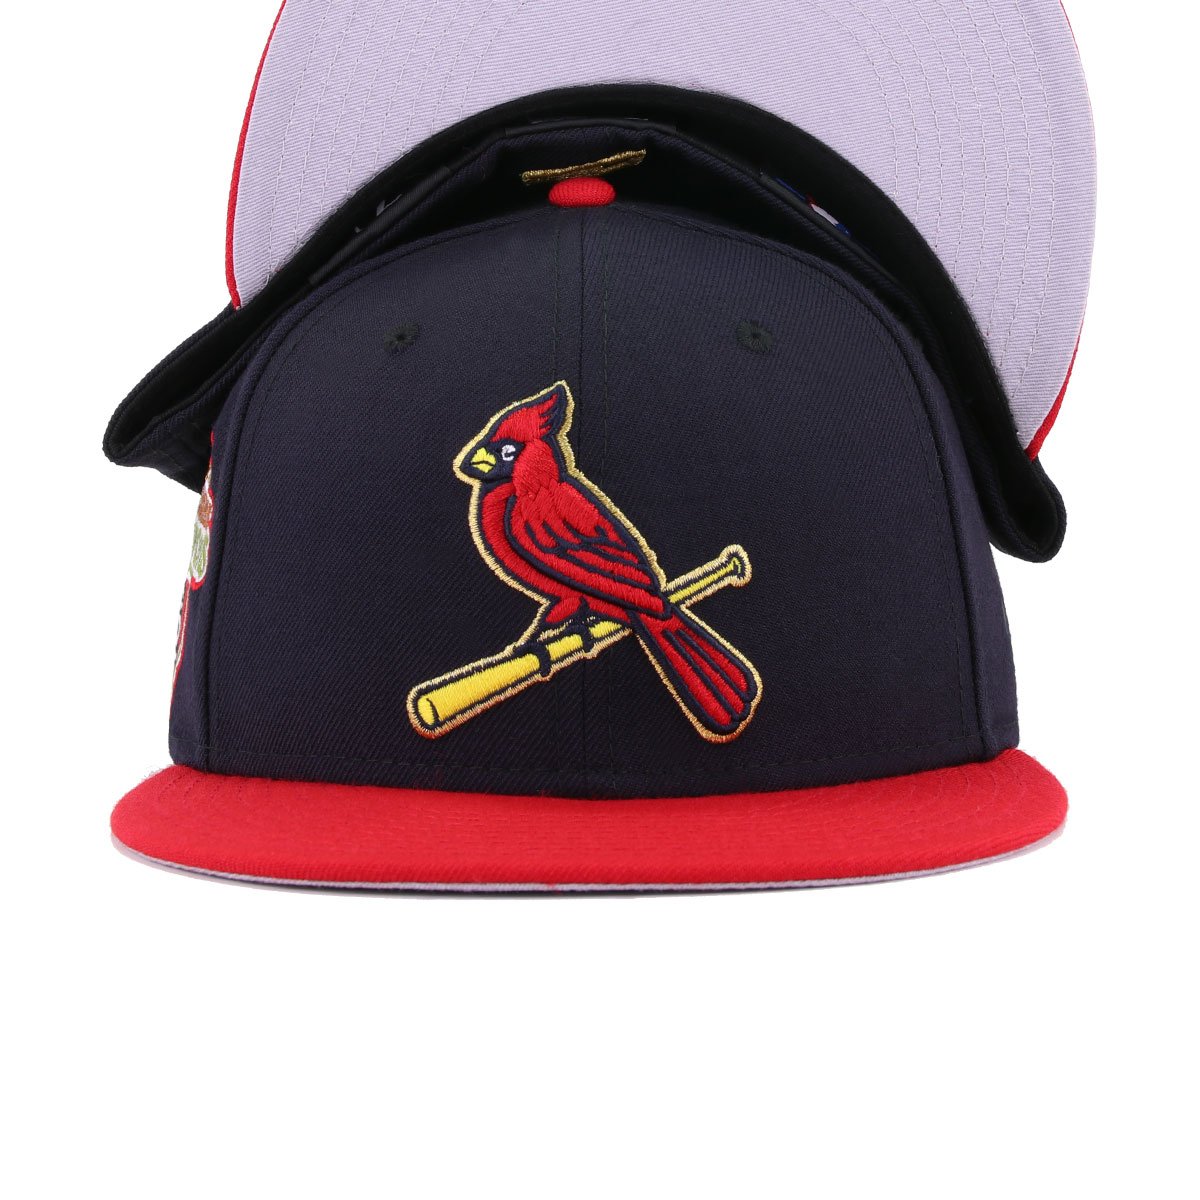 st louis cardinals world series hat